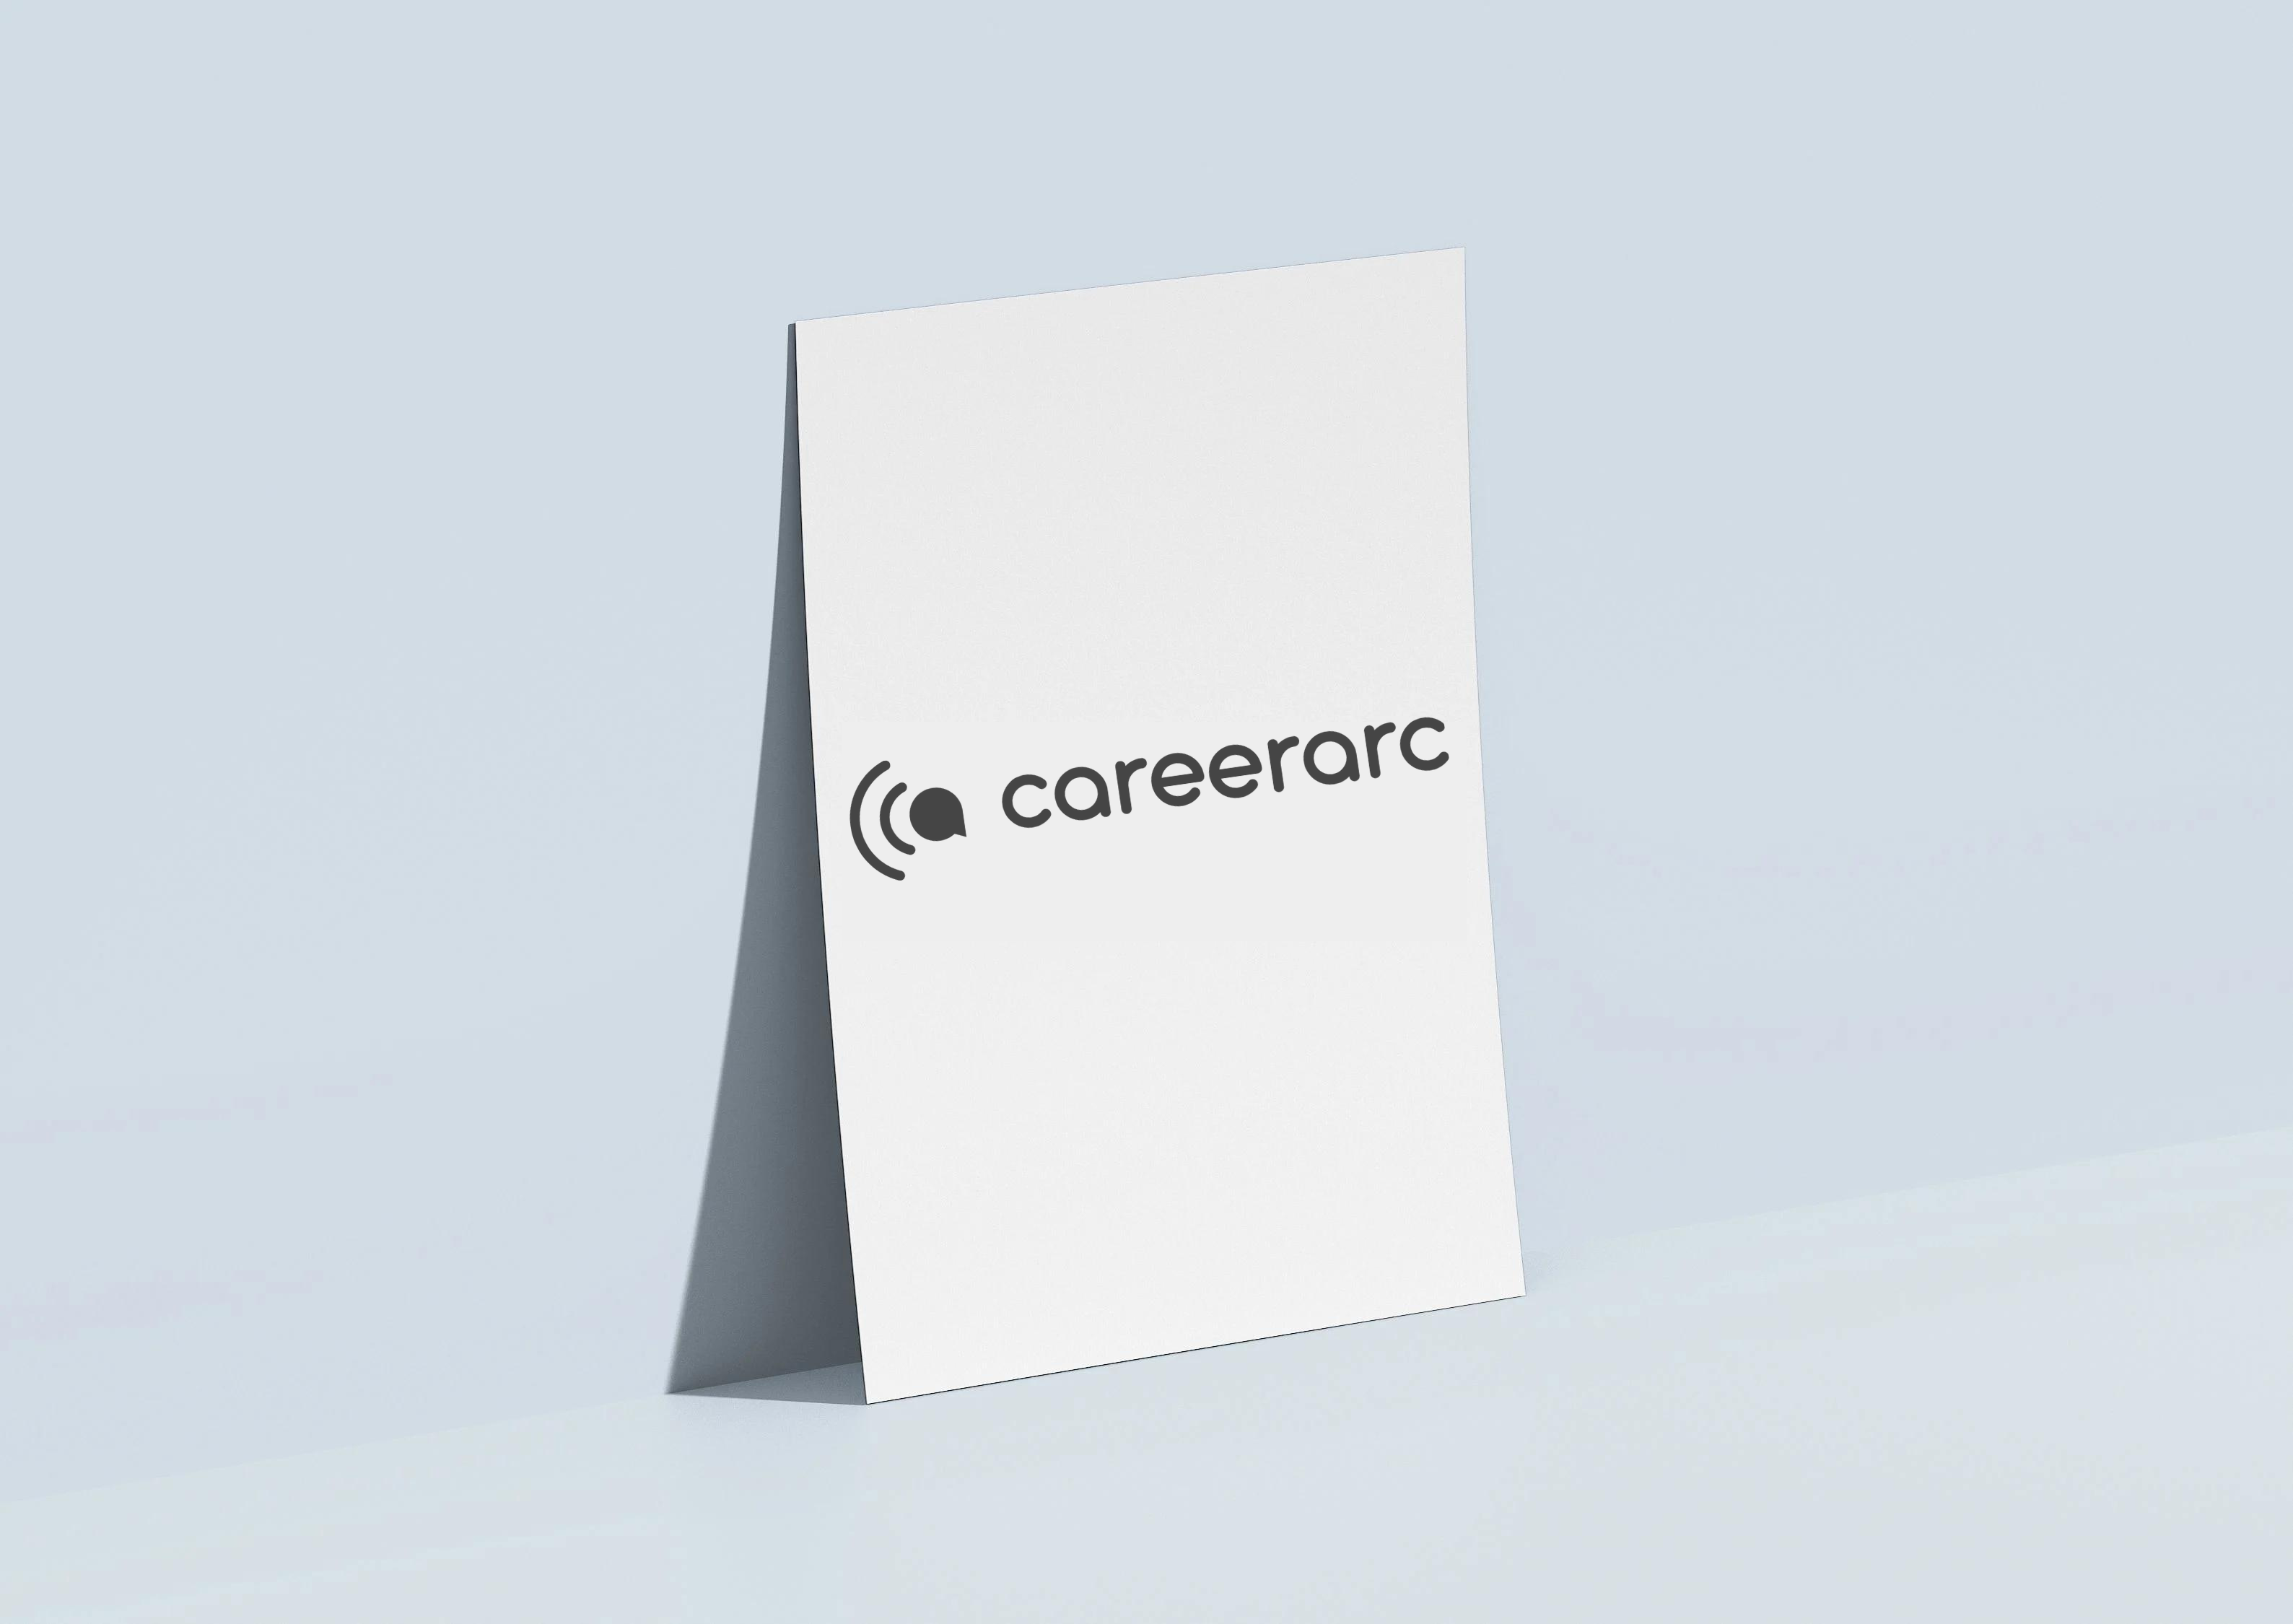 careerarc new logo case study